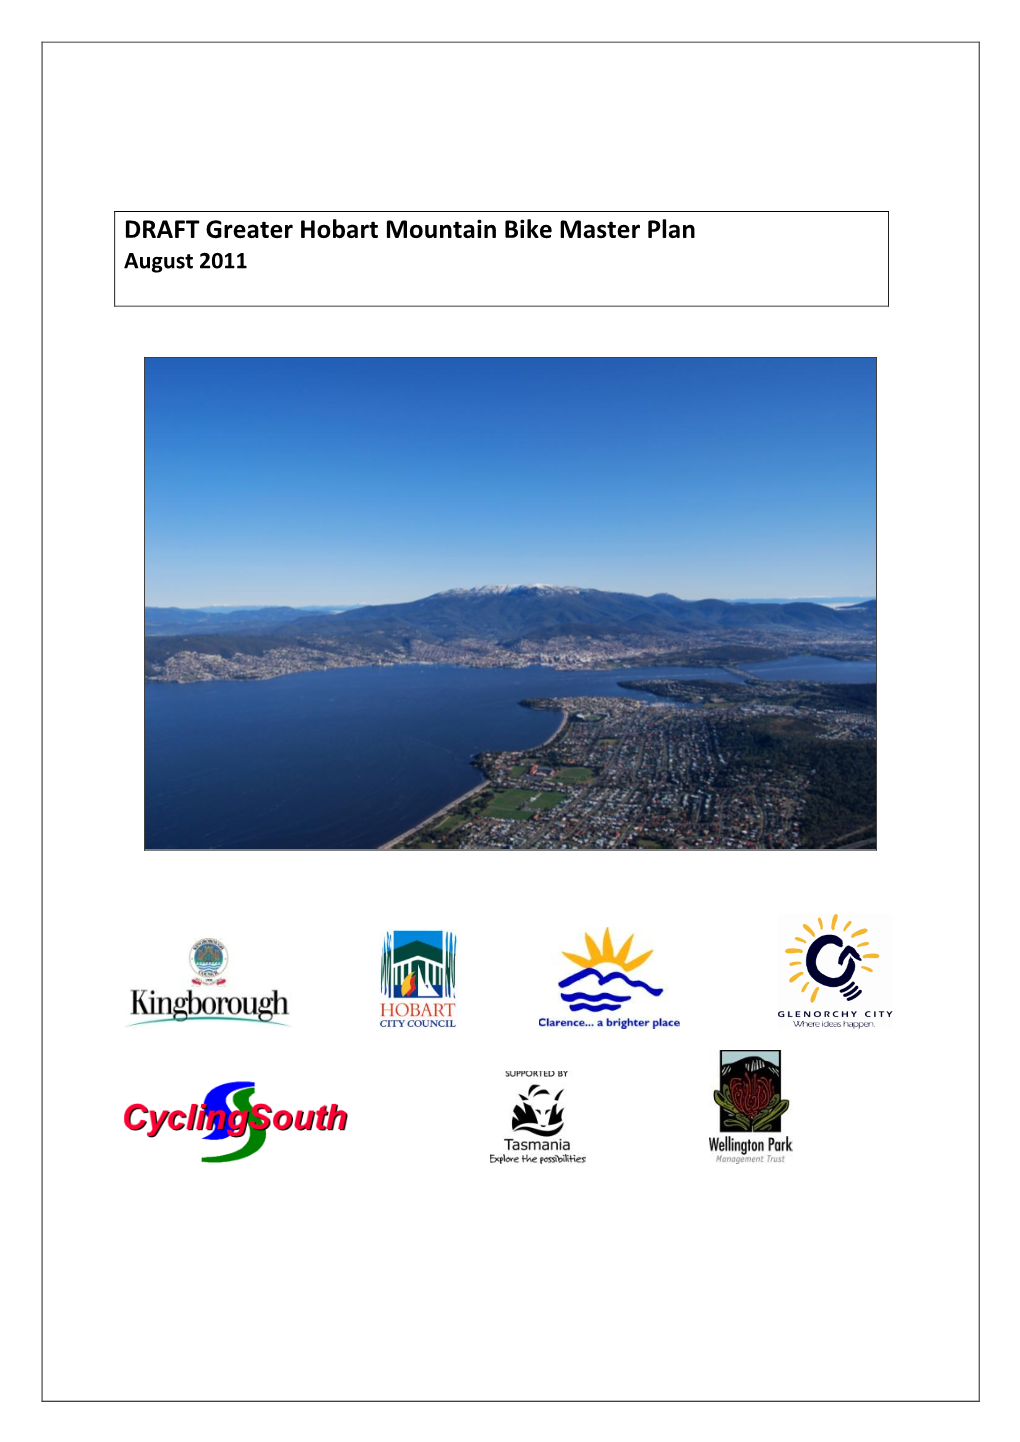 DRAFT Greater Hobart Mountain Bike Master Plan August 2011